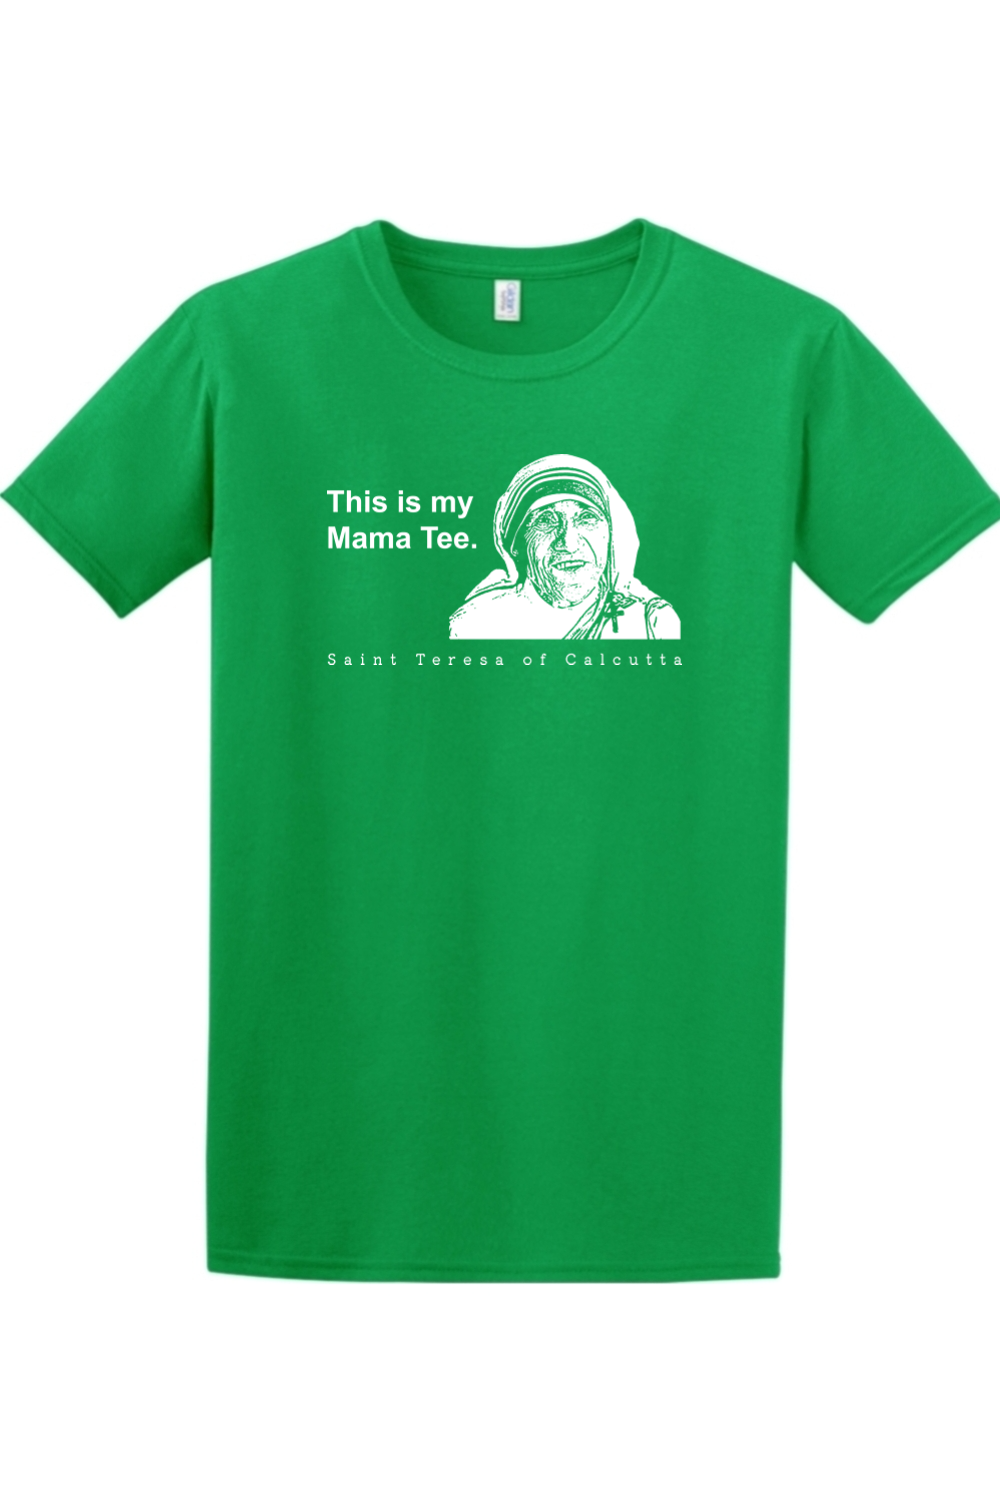 This is my Mama Tee - St. Teresa of Calcutta T-Shirt